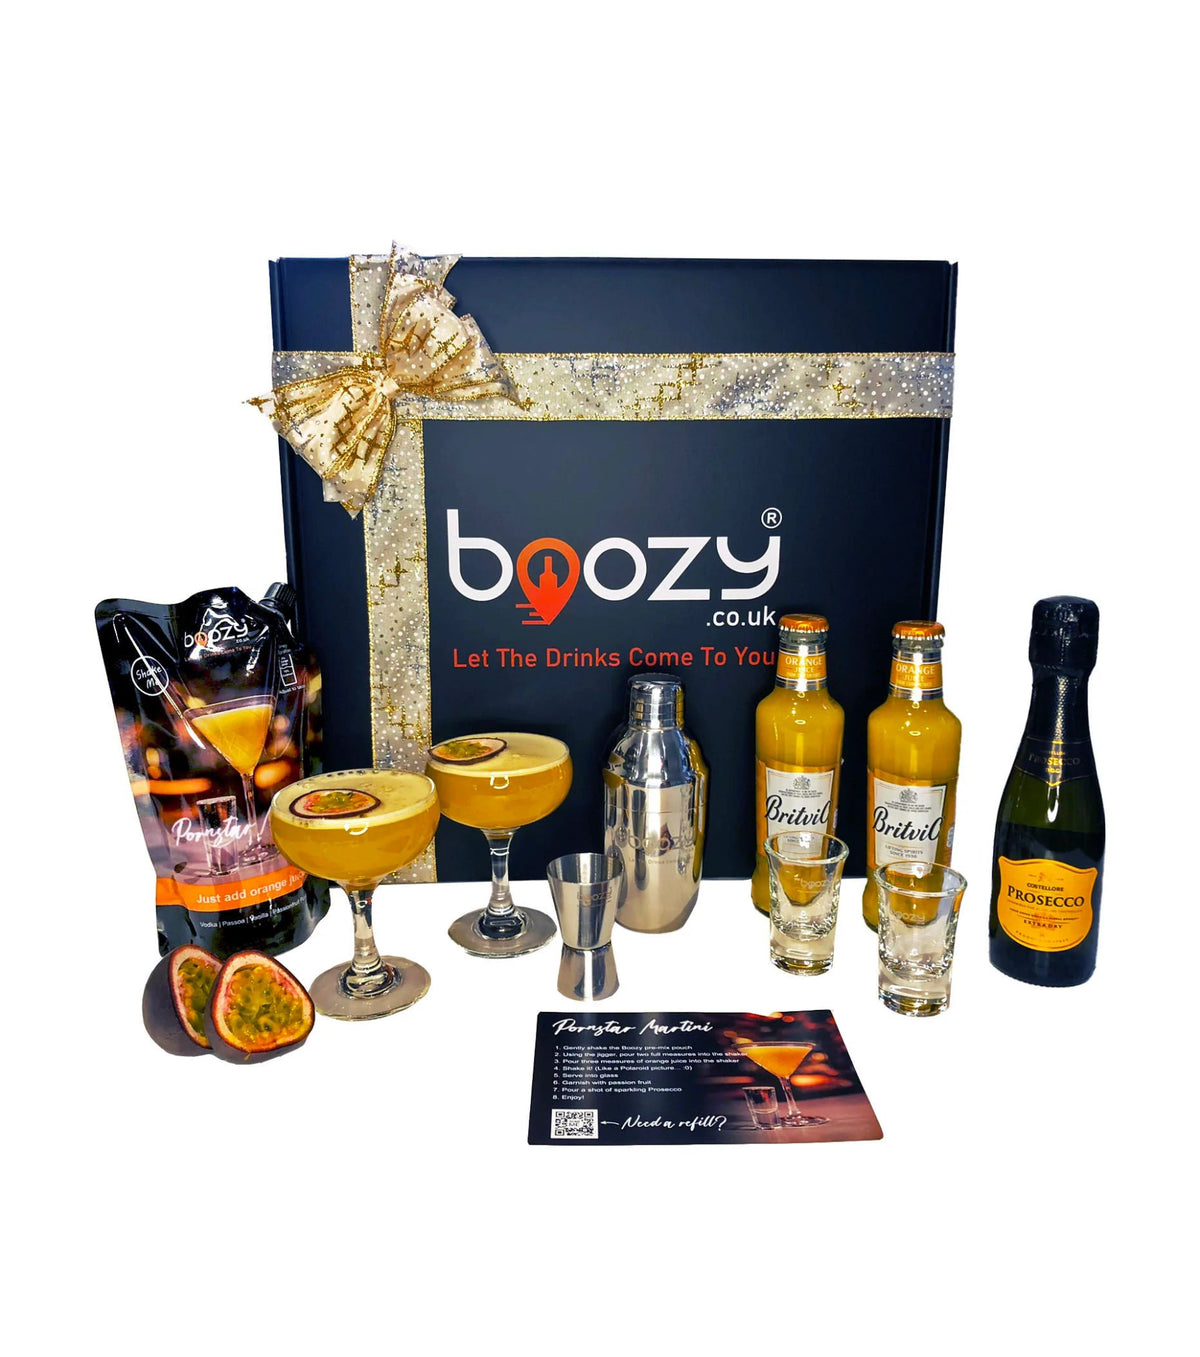 Boozy Pornstar Martini Cocktail Kit With Shaker & Glasses In Gift Box - Boozy